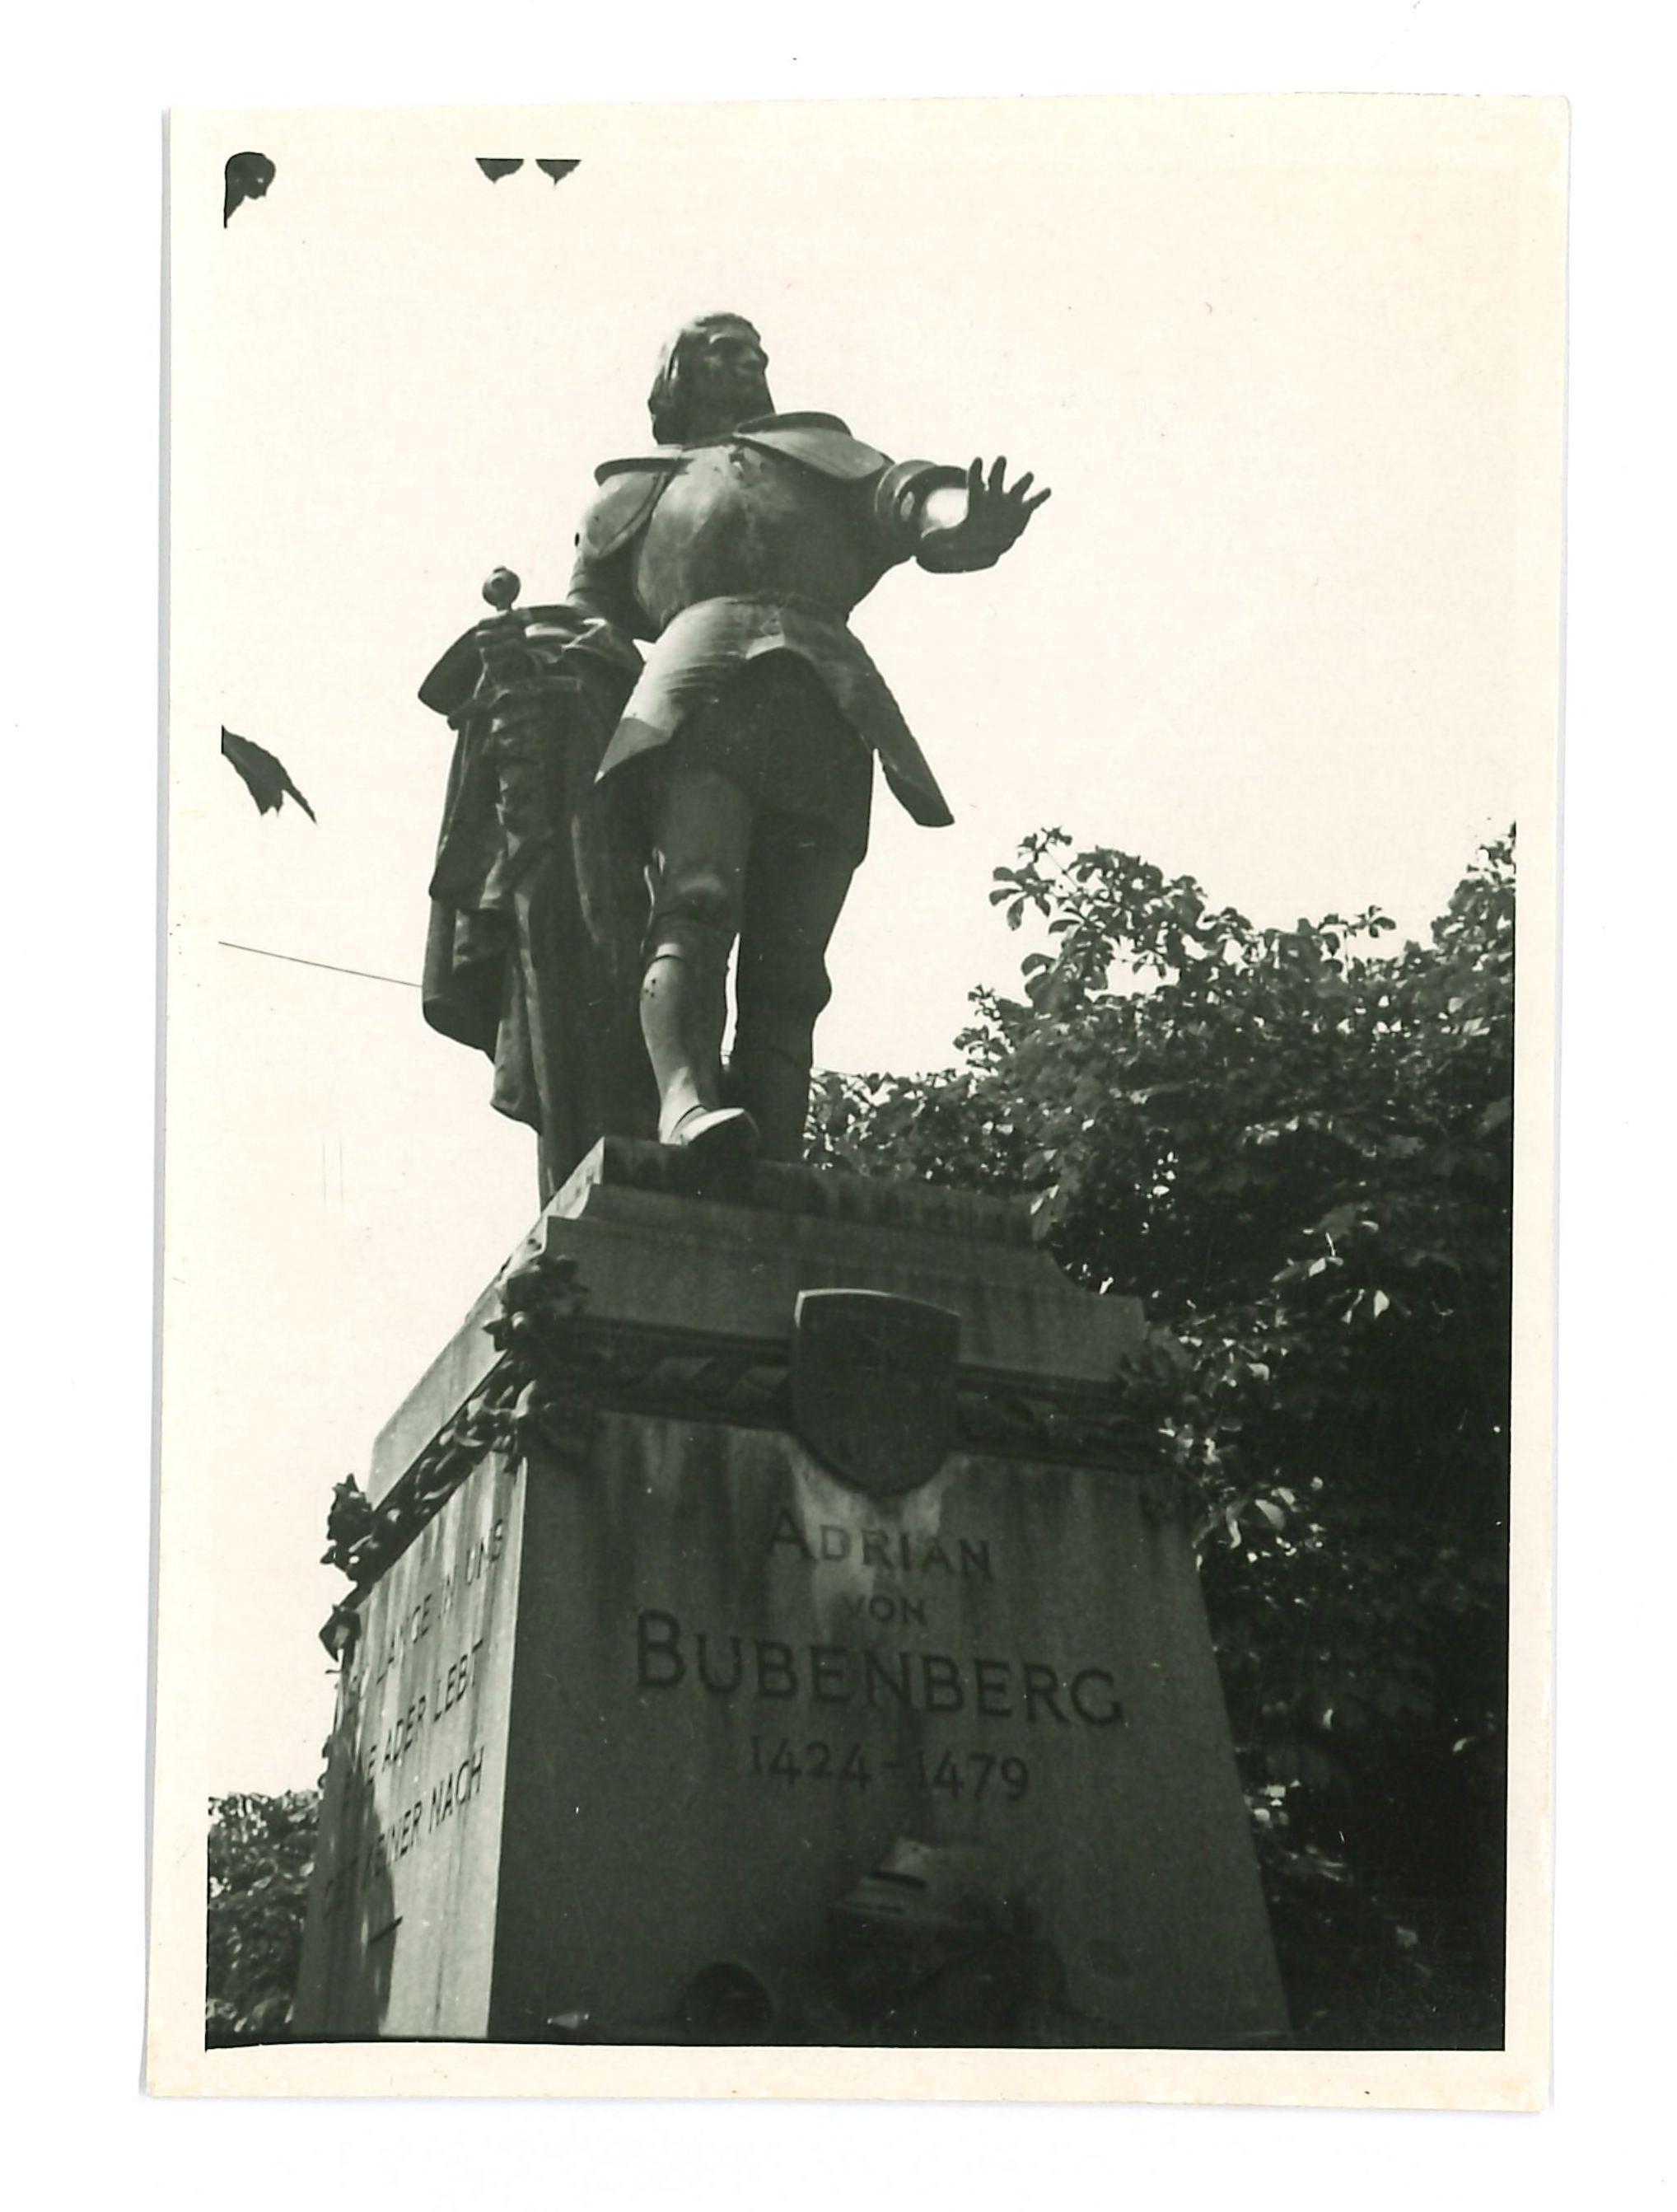 Unknown Figurative Photograph - Statue of Adrian von Bubenberg-Denkmal - Vintage photo - mid-20th Century